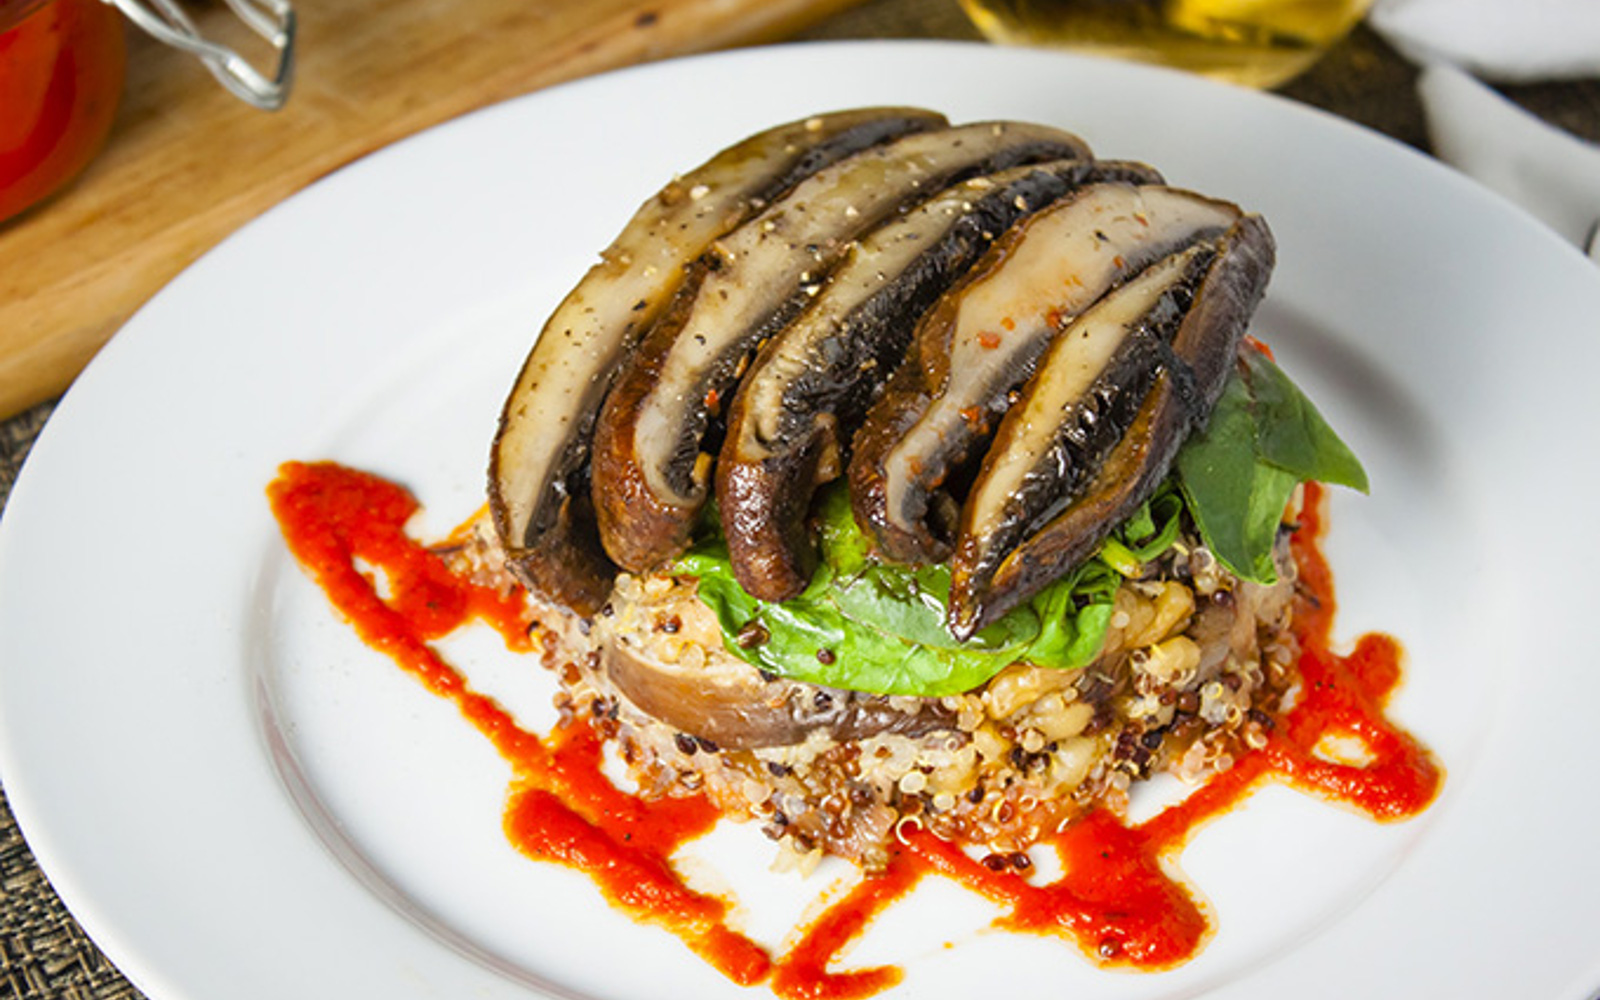 Quinoa and Portobello Mushroom Stacks With a Red Pepper Coulis